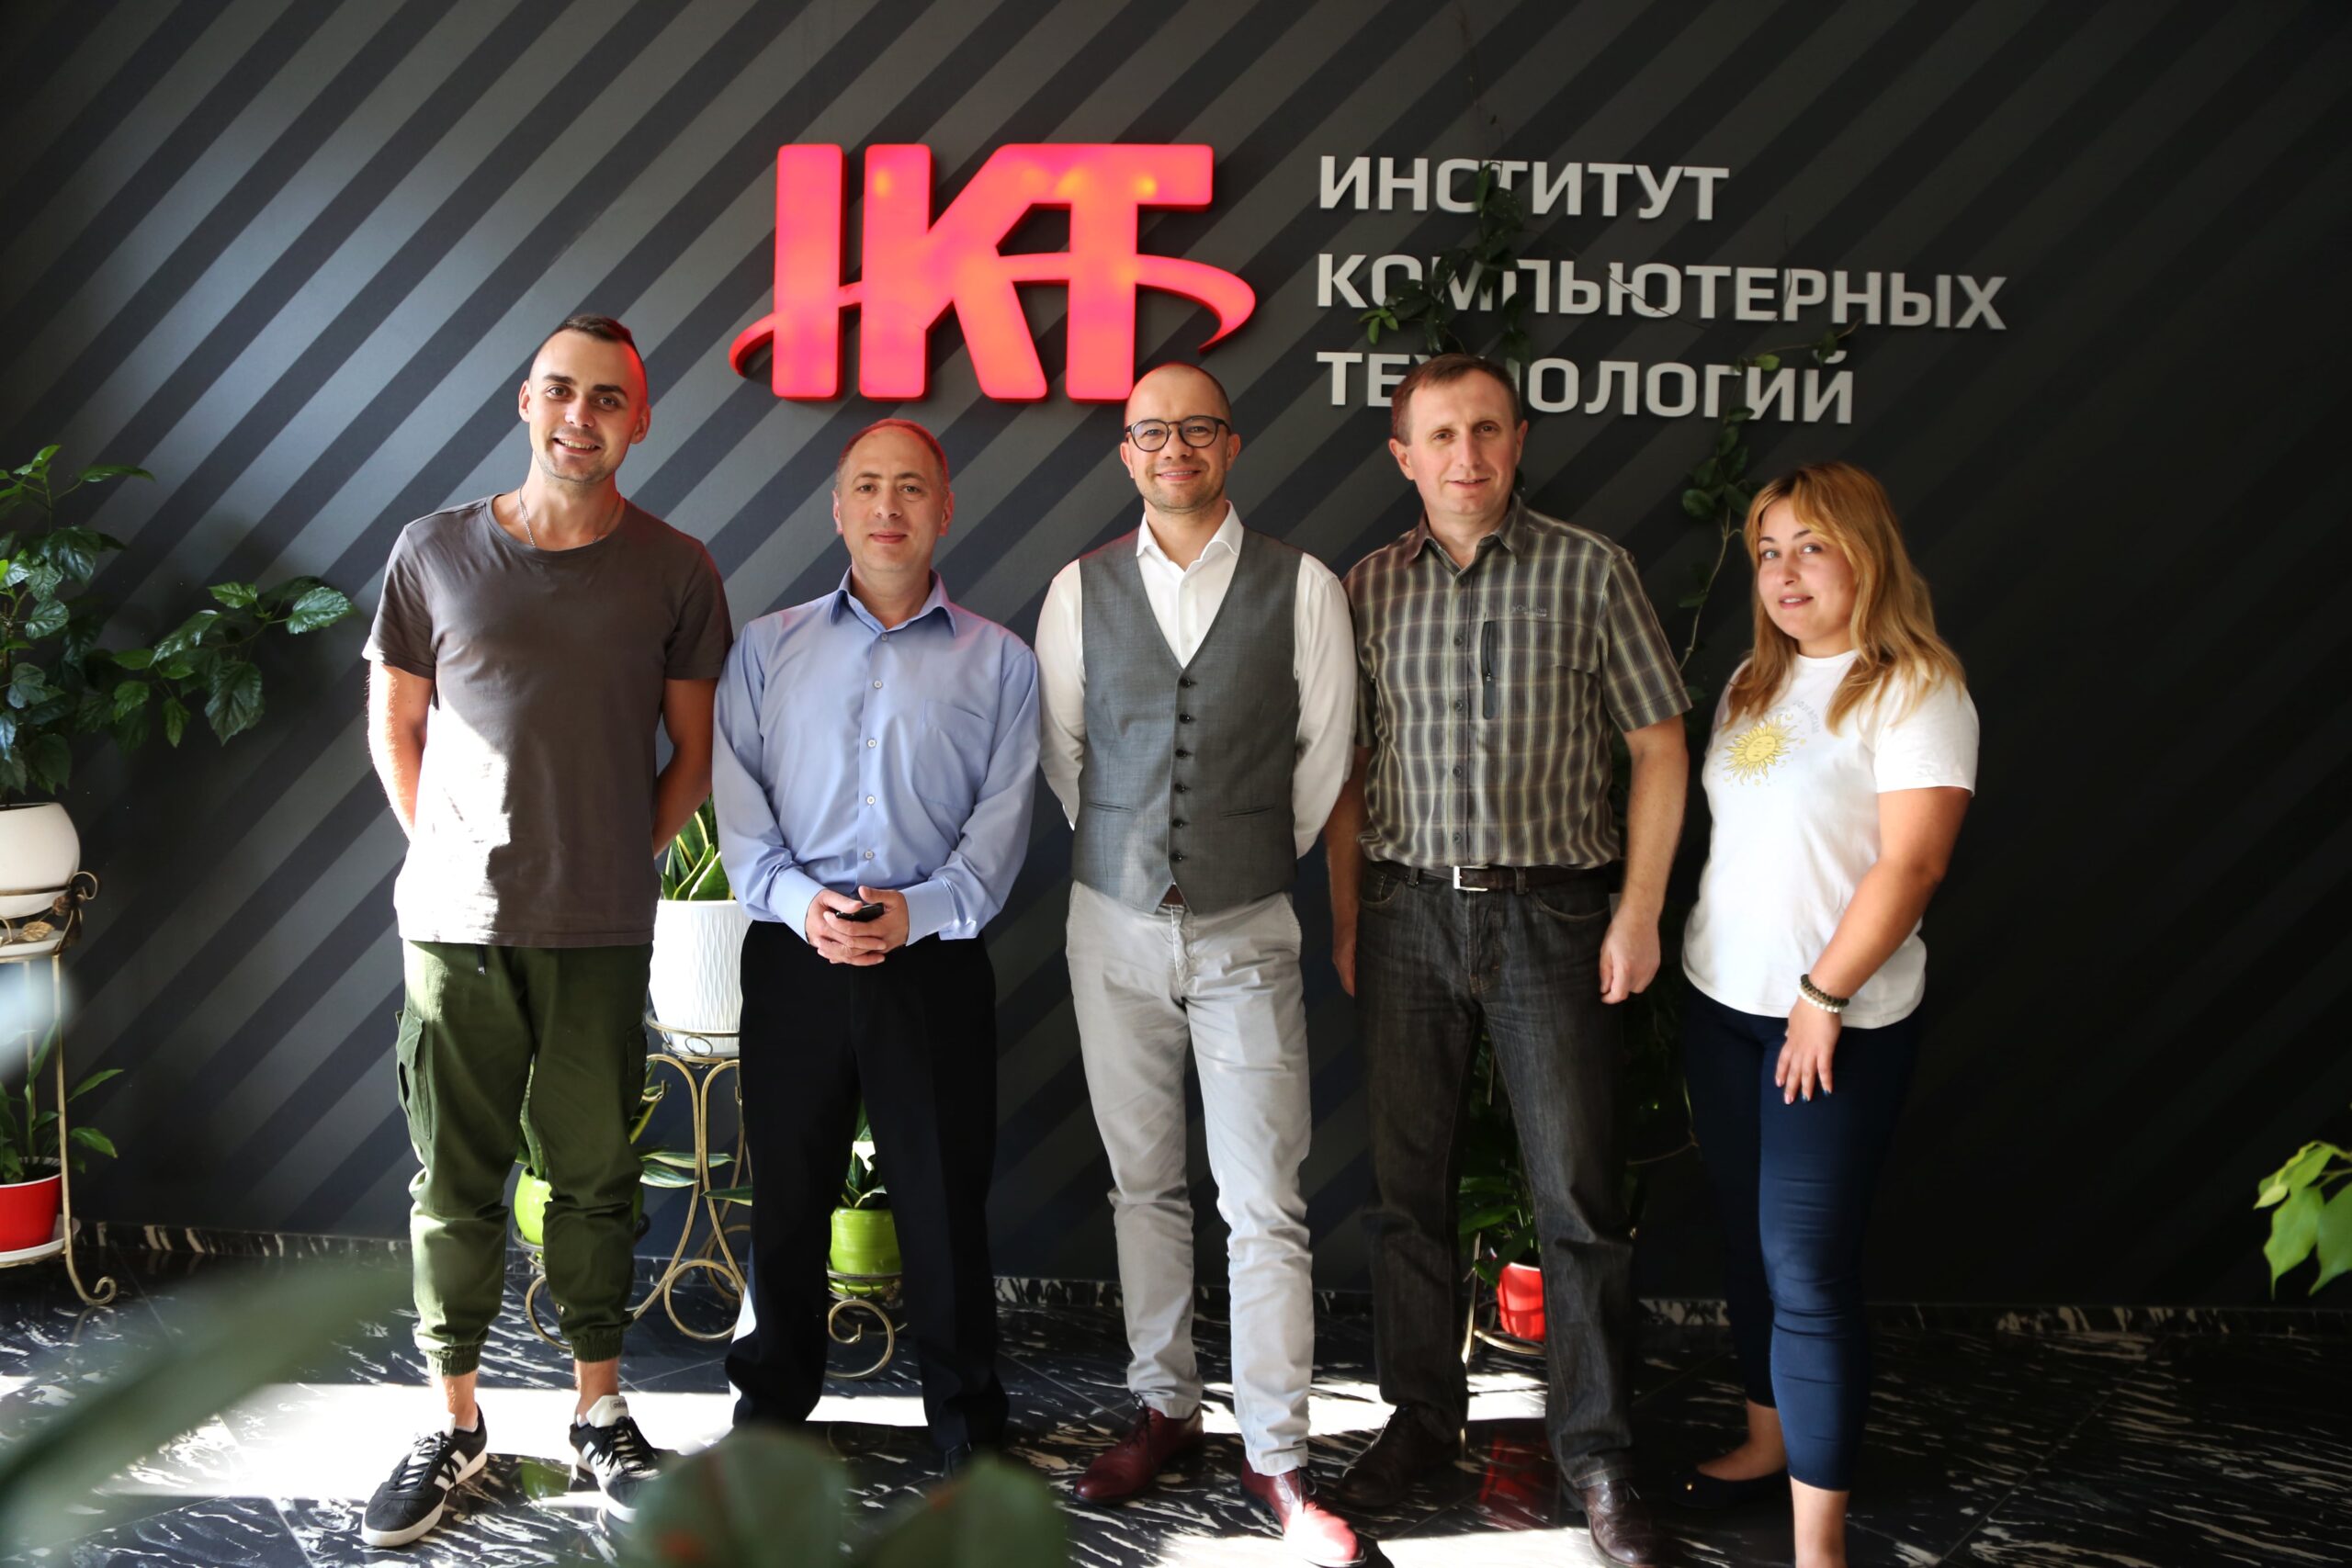 Business meeting with DIGI-KEY representative Arkadiusz Rataj